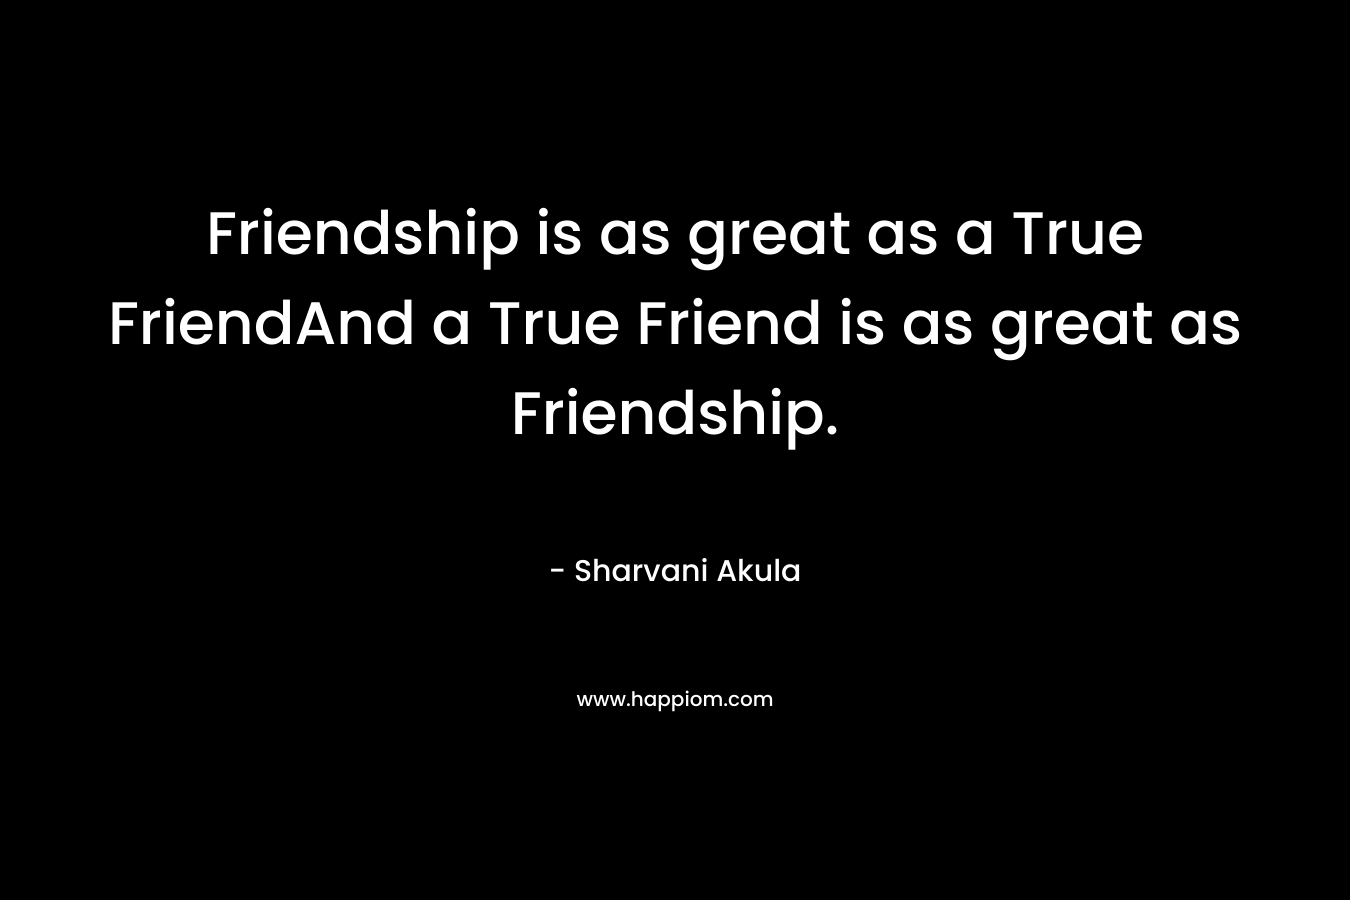 Friendship is as great as a True FriendAnd a True Friend is as great as Friendship.